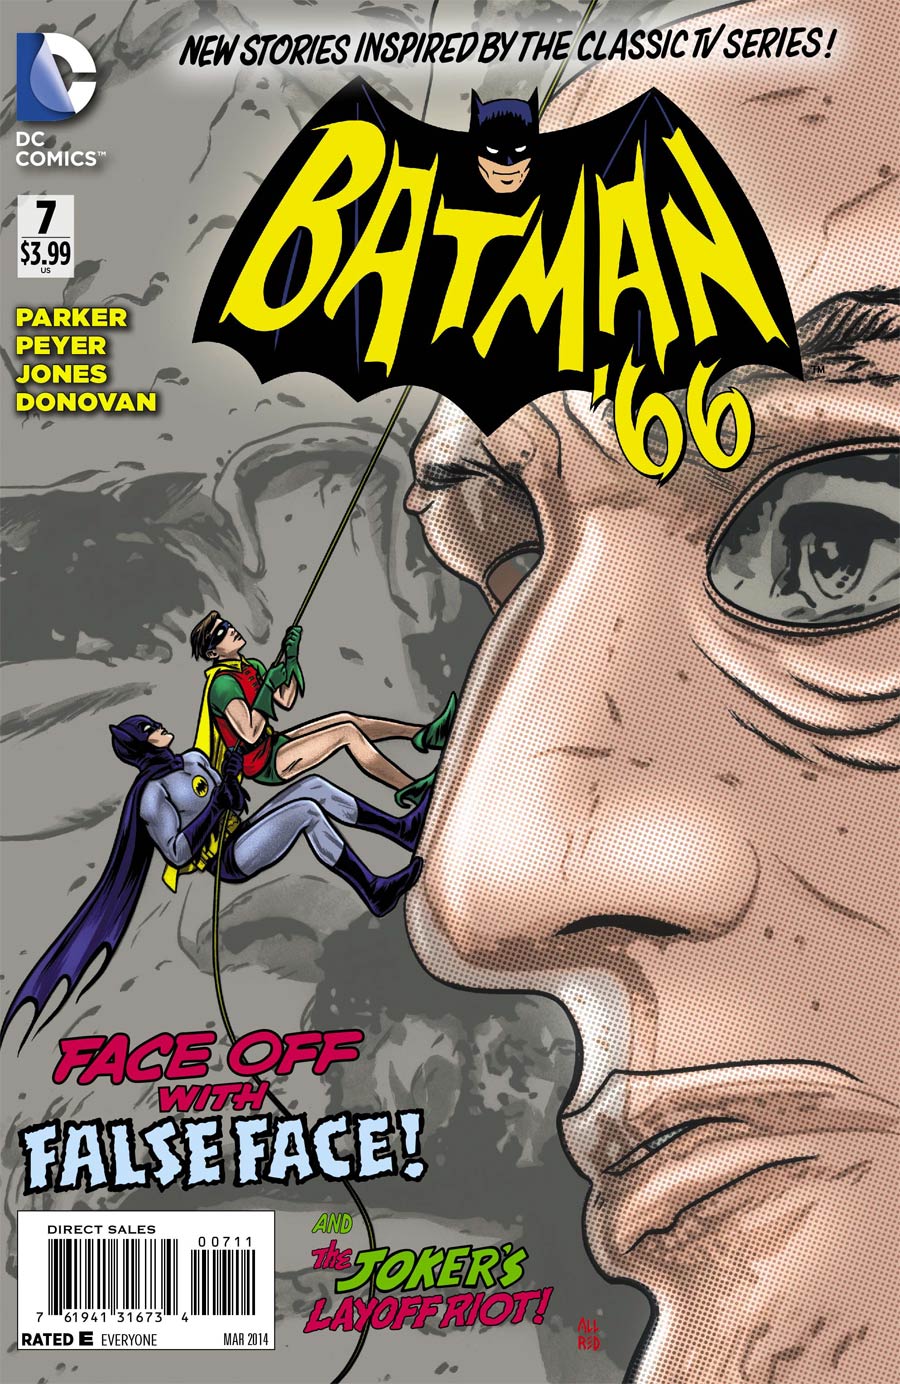 Batman 66 #7